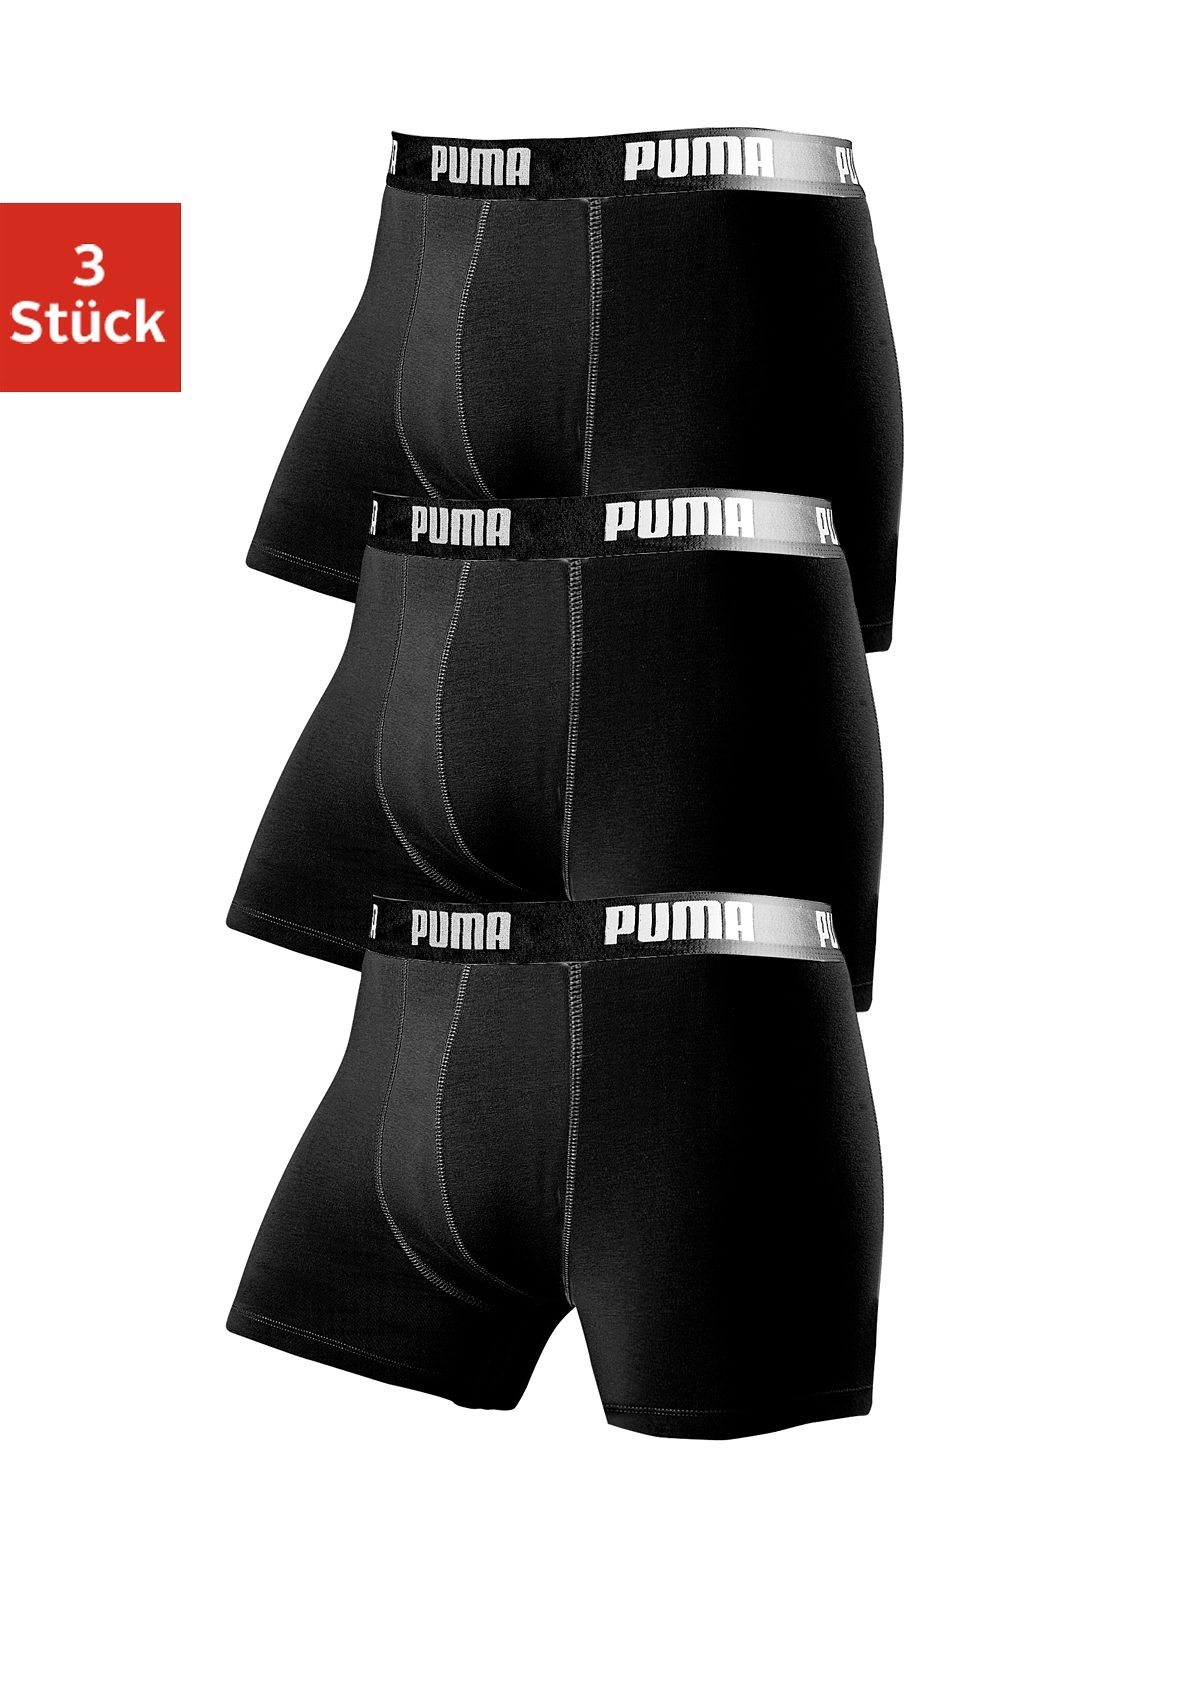 PUMA Retro Pants (3 Stück), Boxer in normaler Passform online kaufen | OTTO